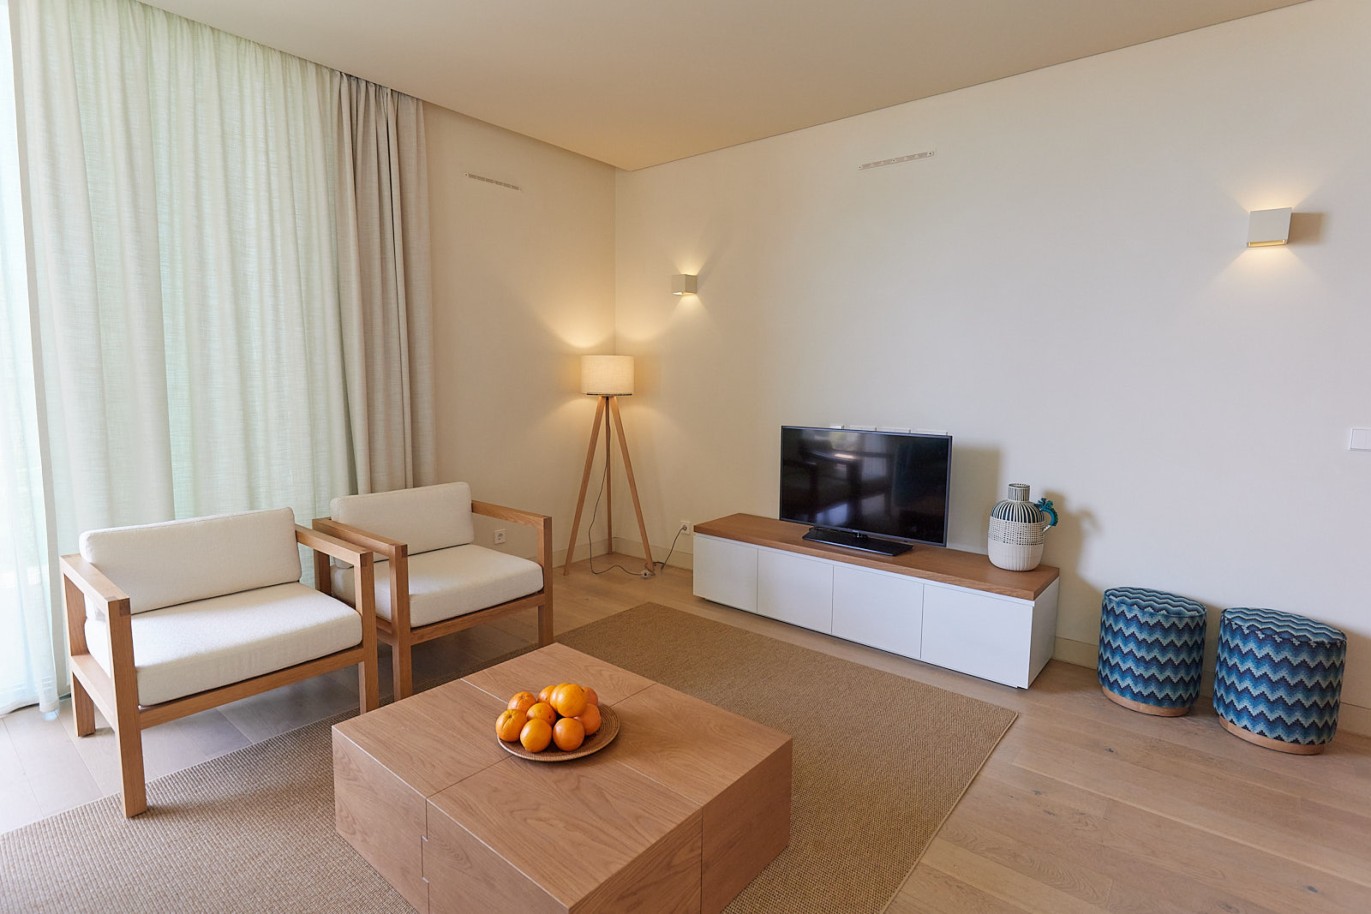 1 bedroom apartment in resort, for sale in Porches, Algarve_228992